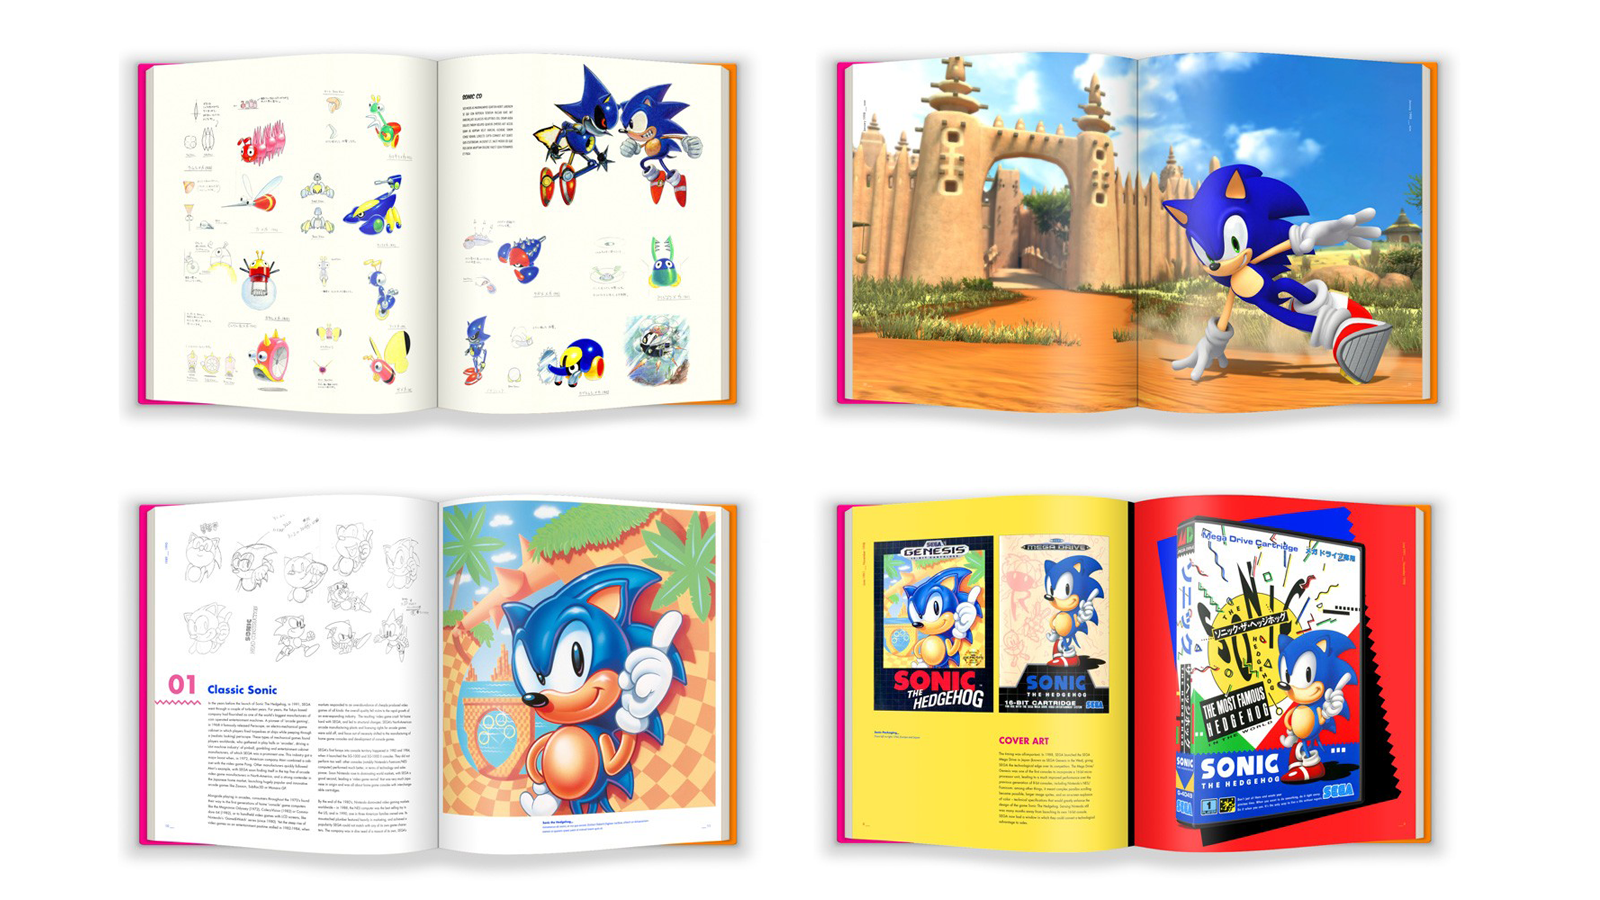 Sonic the hedgehog: 25 anniversary art book 